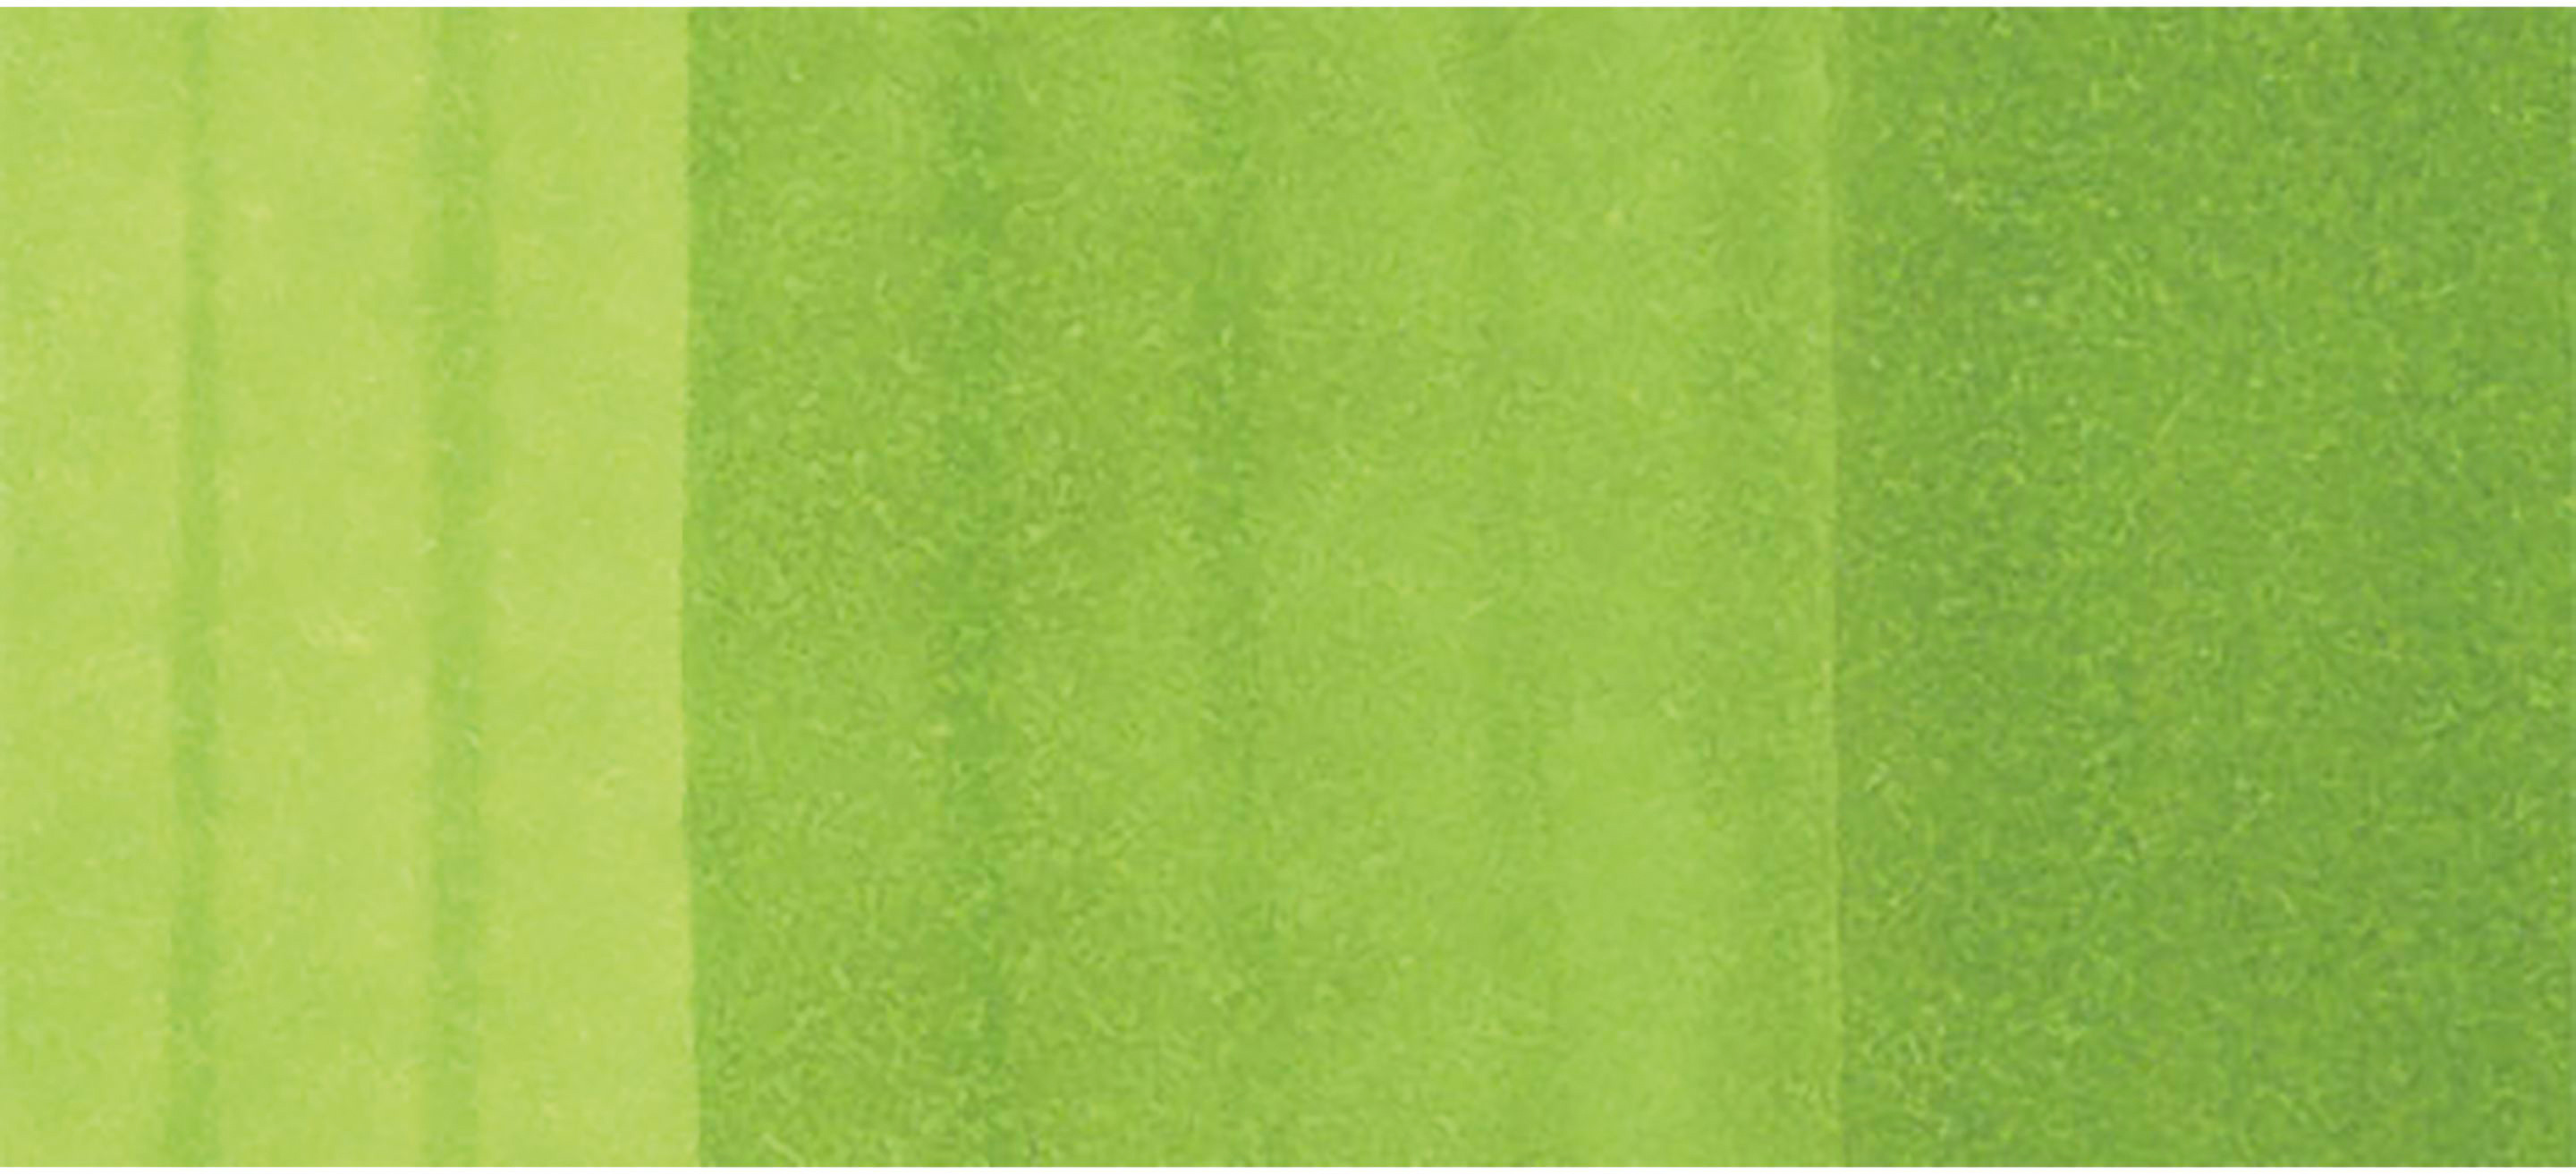 COPIC Marker Classic 20075201 YG25 - Celadon Green